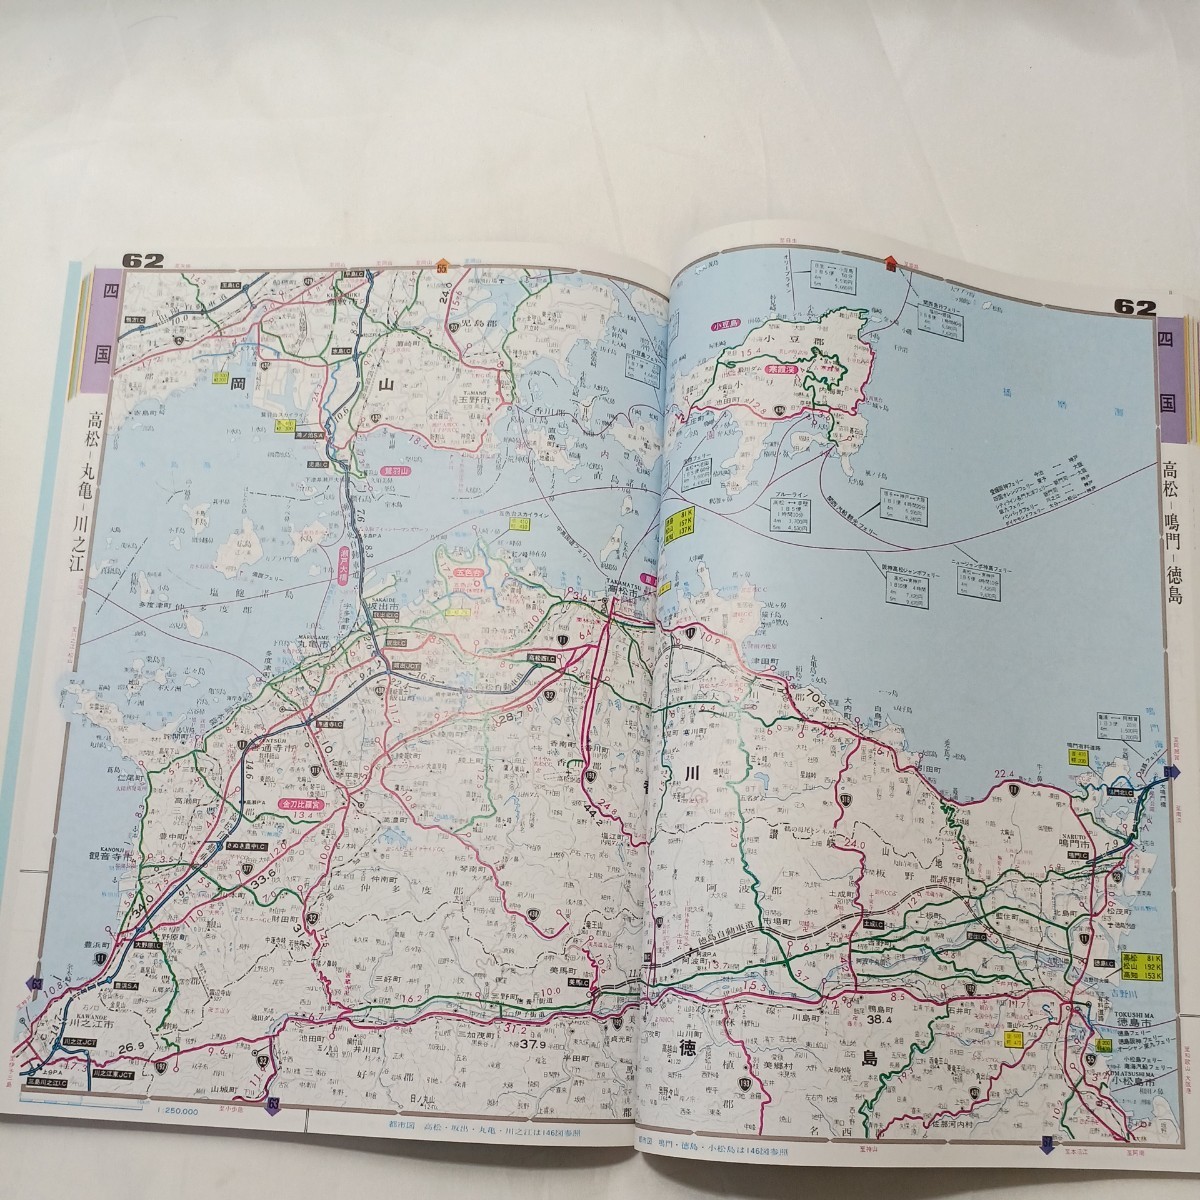 zaa-503♪ワイド全国版道路地図 (ルチエールワイド道路地図) 日地出版株式会社 (著) 1993年_画像7